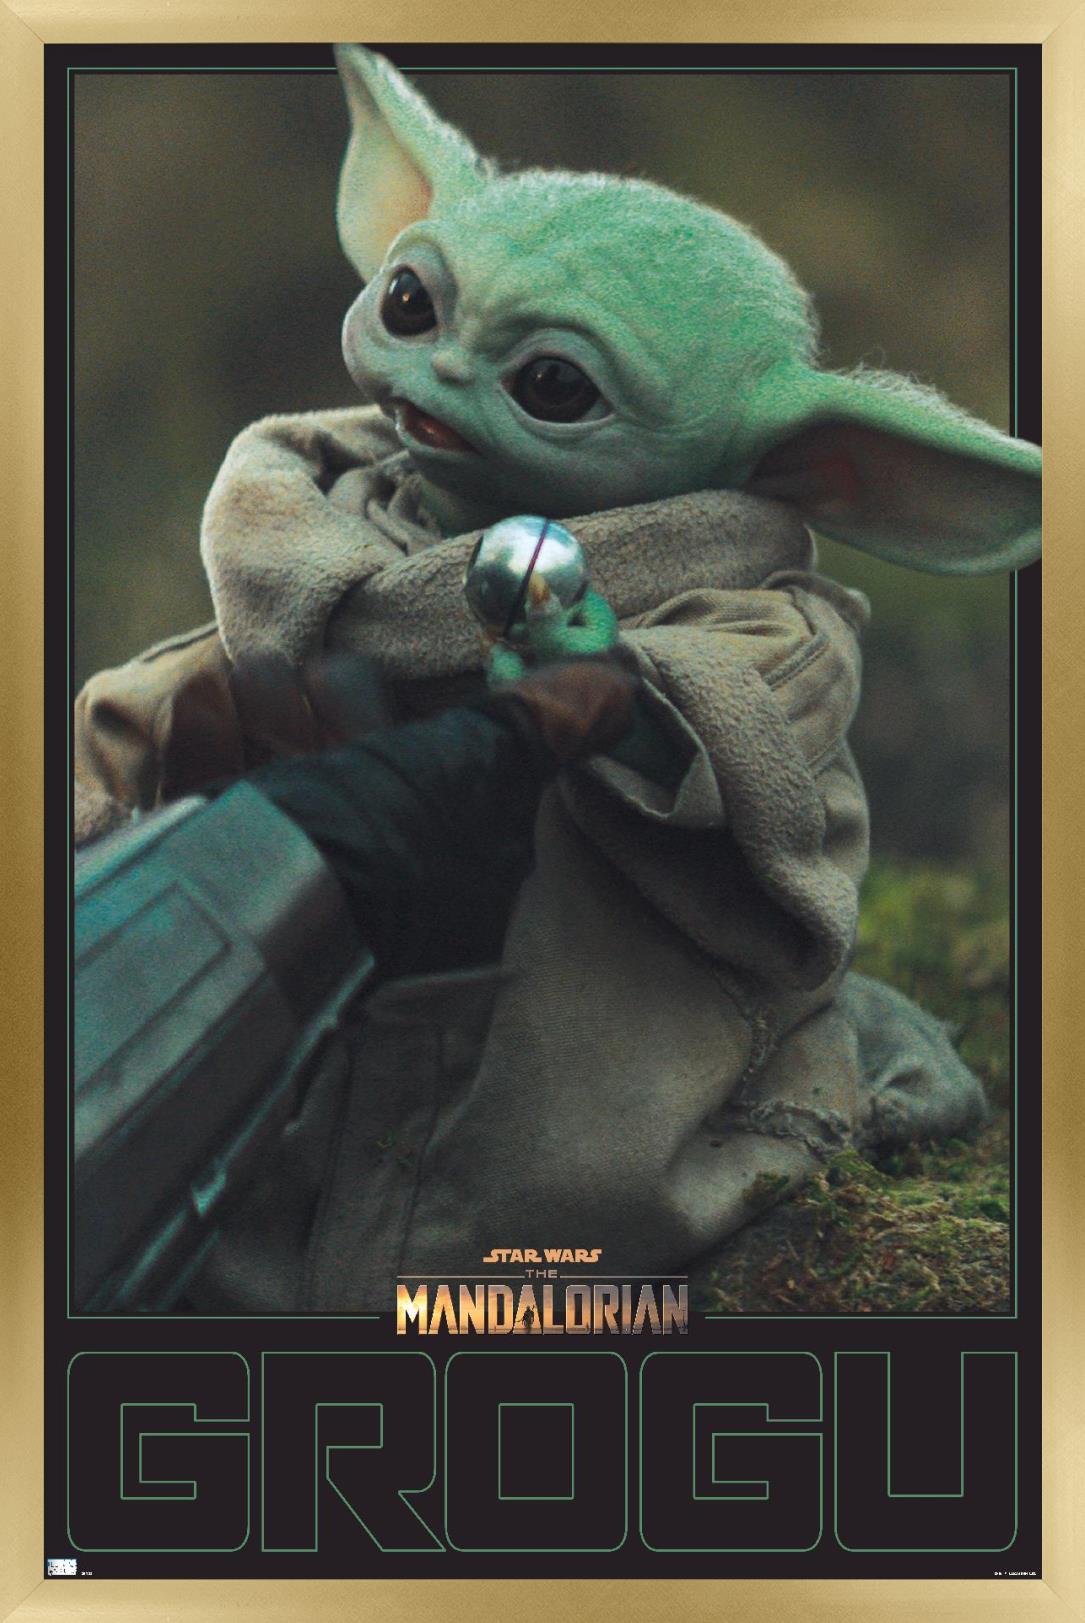 Star Wars The Mandalorian Season 2 - Grogu Wall Poster, 14.725" x 22.375", Framed - image 1 of 5